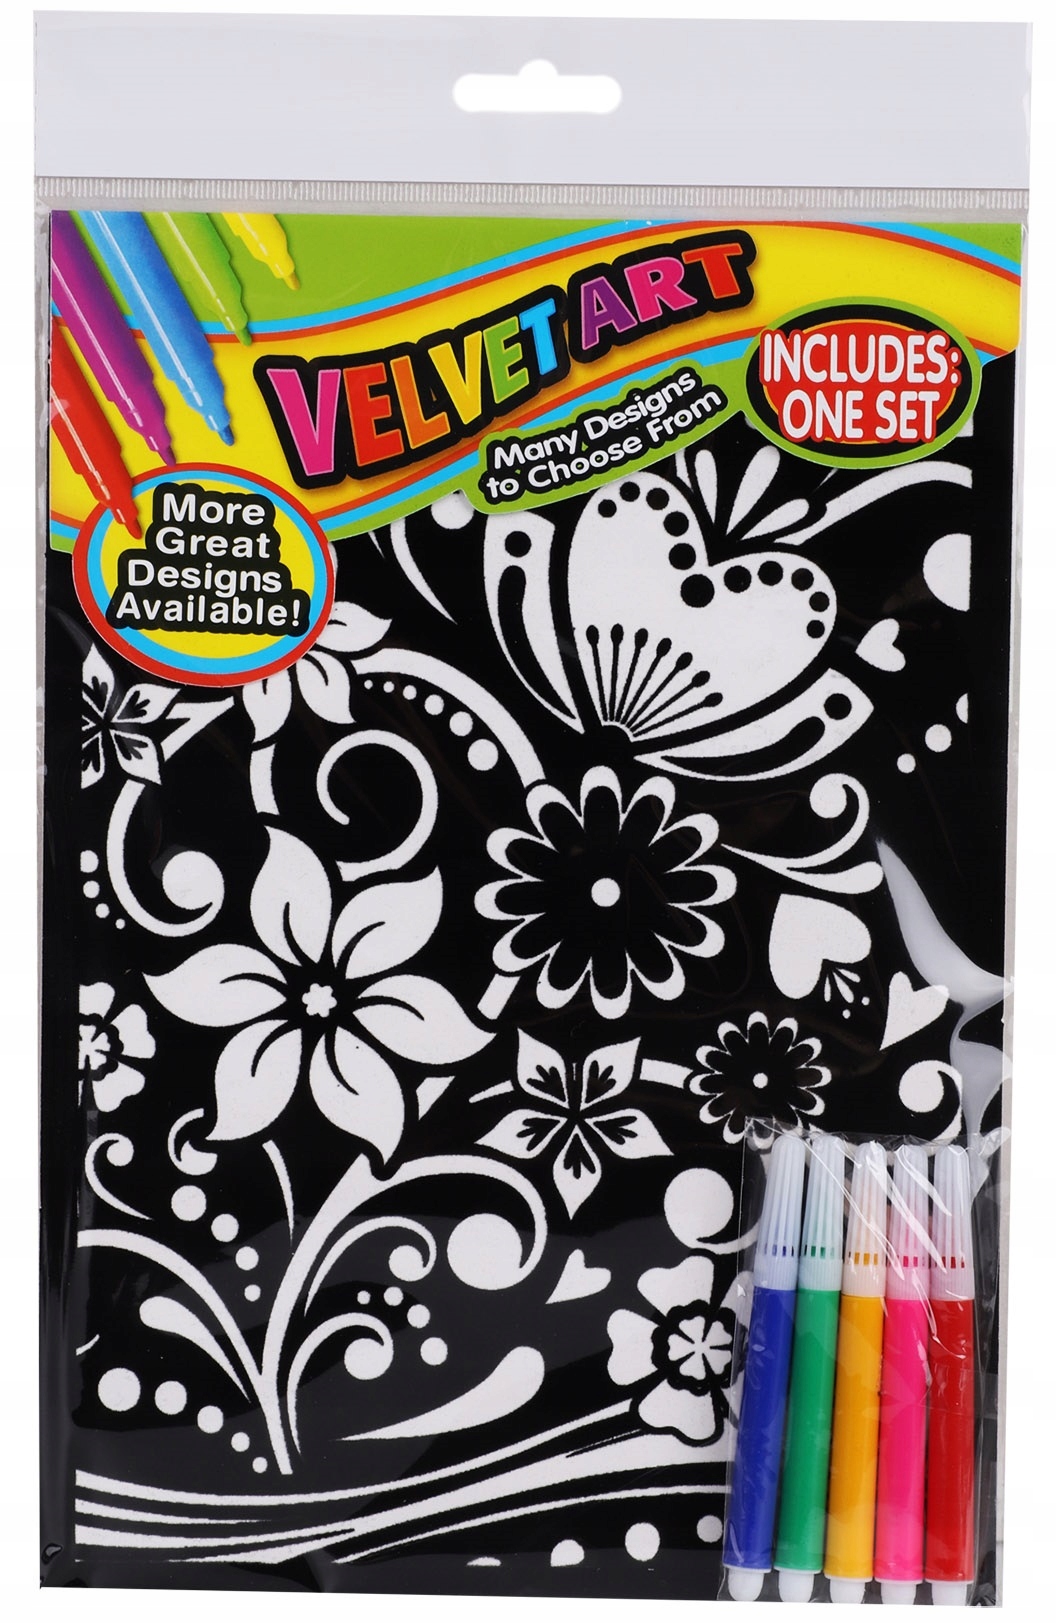 Cra-Z-Art Velvet Brite Set Creative Coloring Set